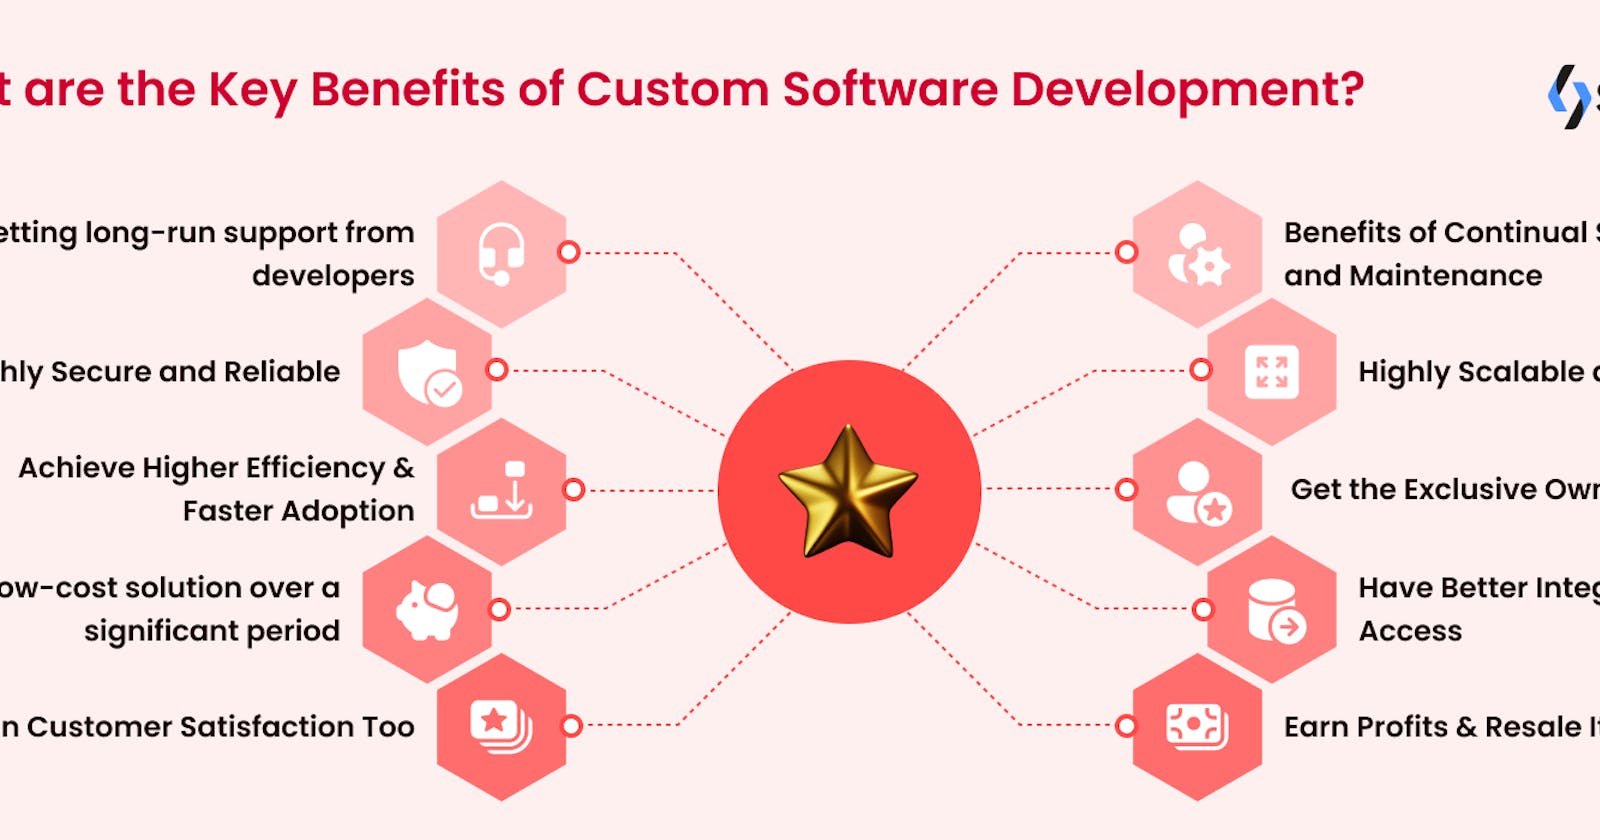 10 Key Benefits of Custom Software Development